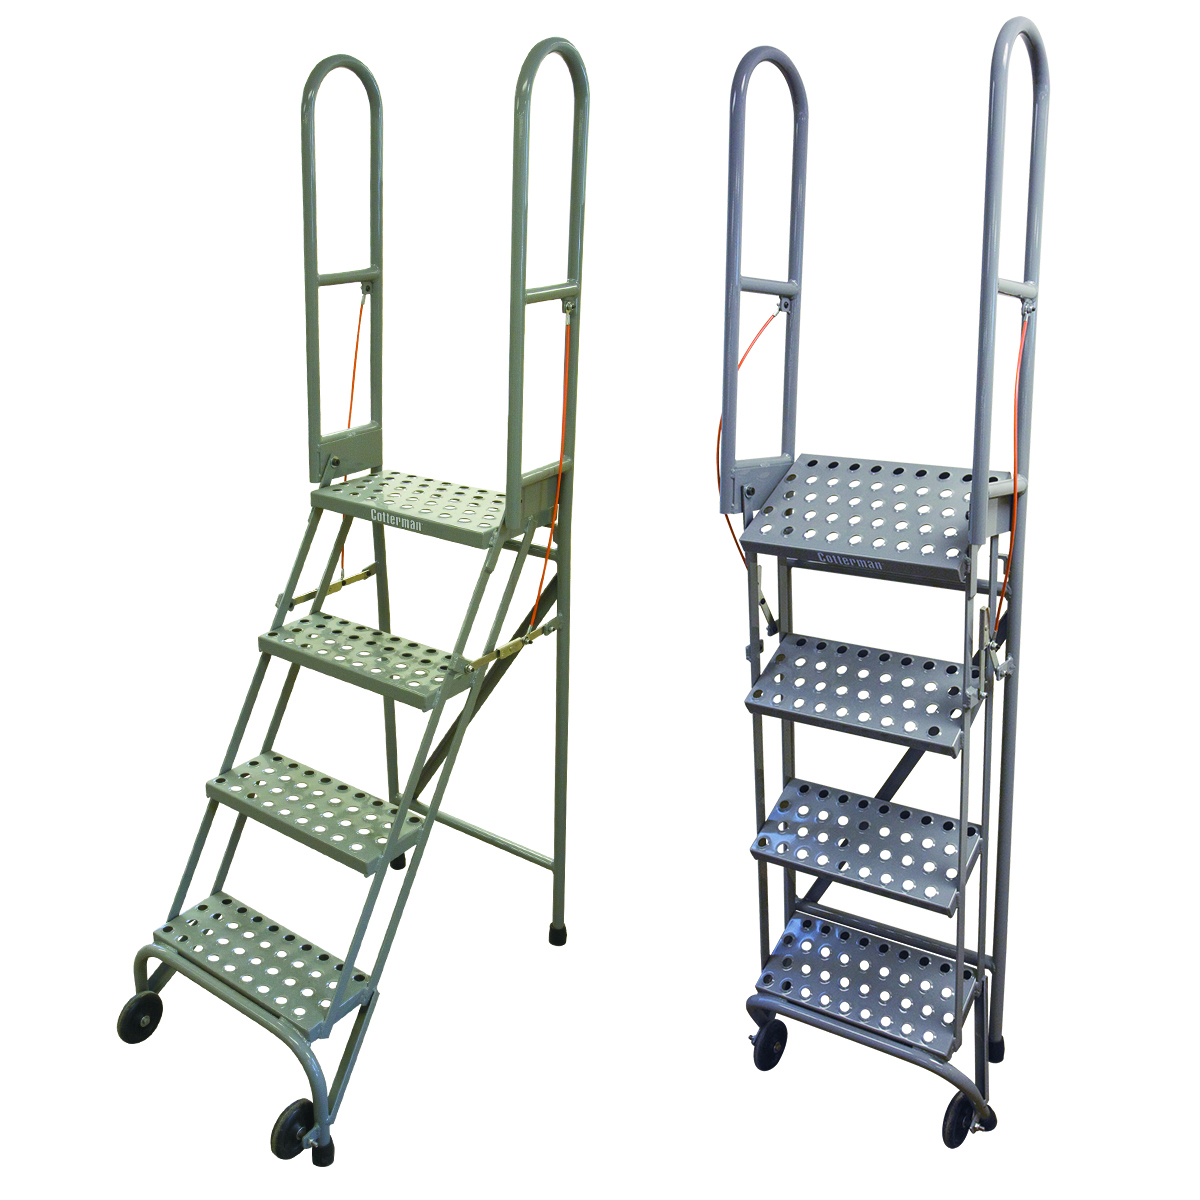 Folding Ladder. Creative Foldable Ladder. Double Sided Compact Folding Ladder uk. GP Logistics Compact Folding Ladder USA. Top step